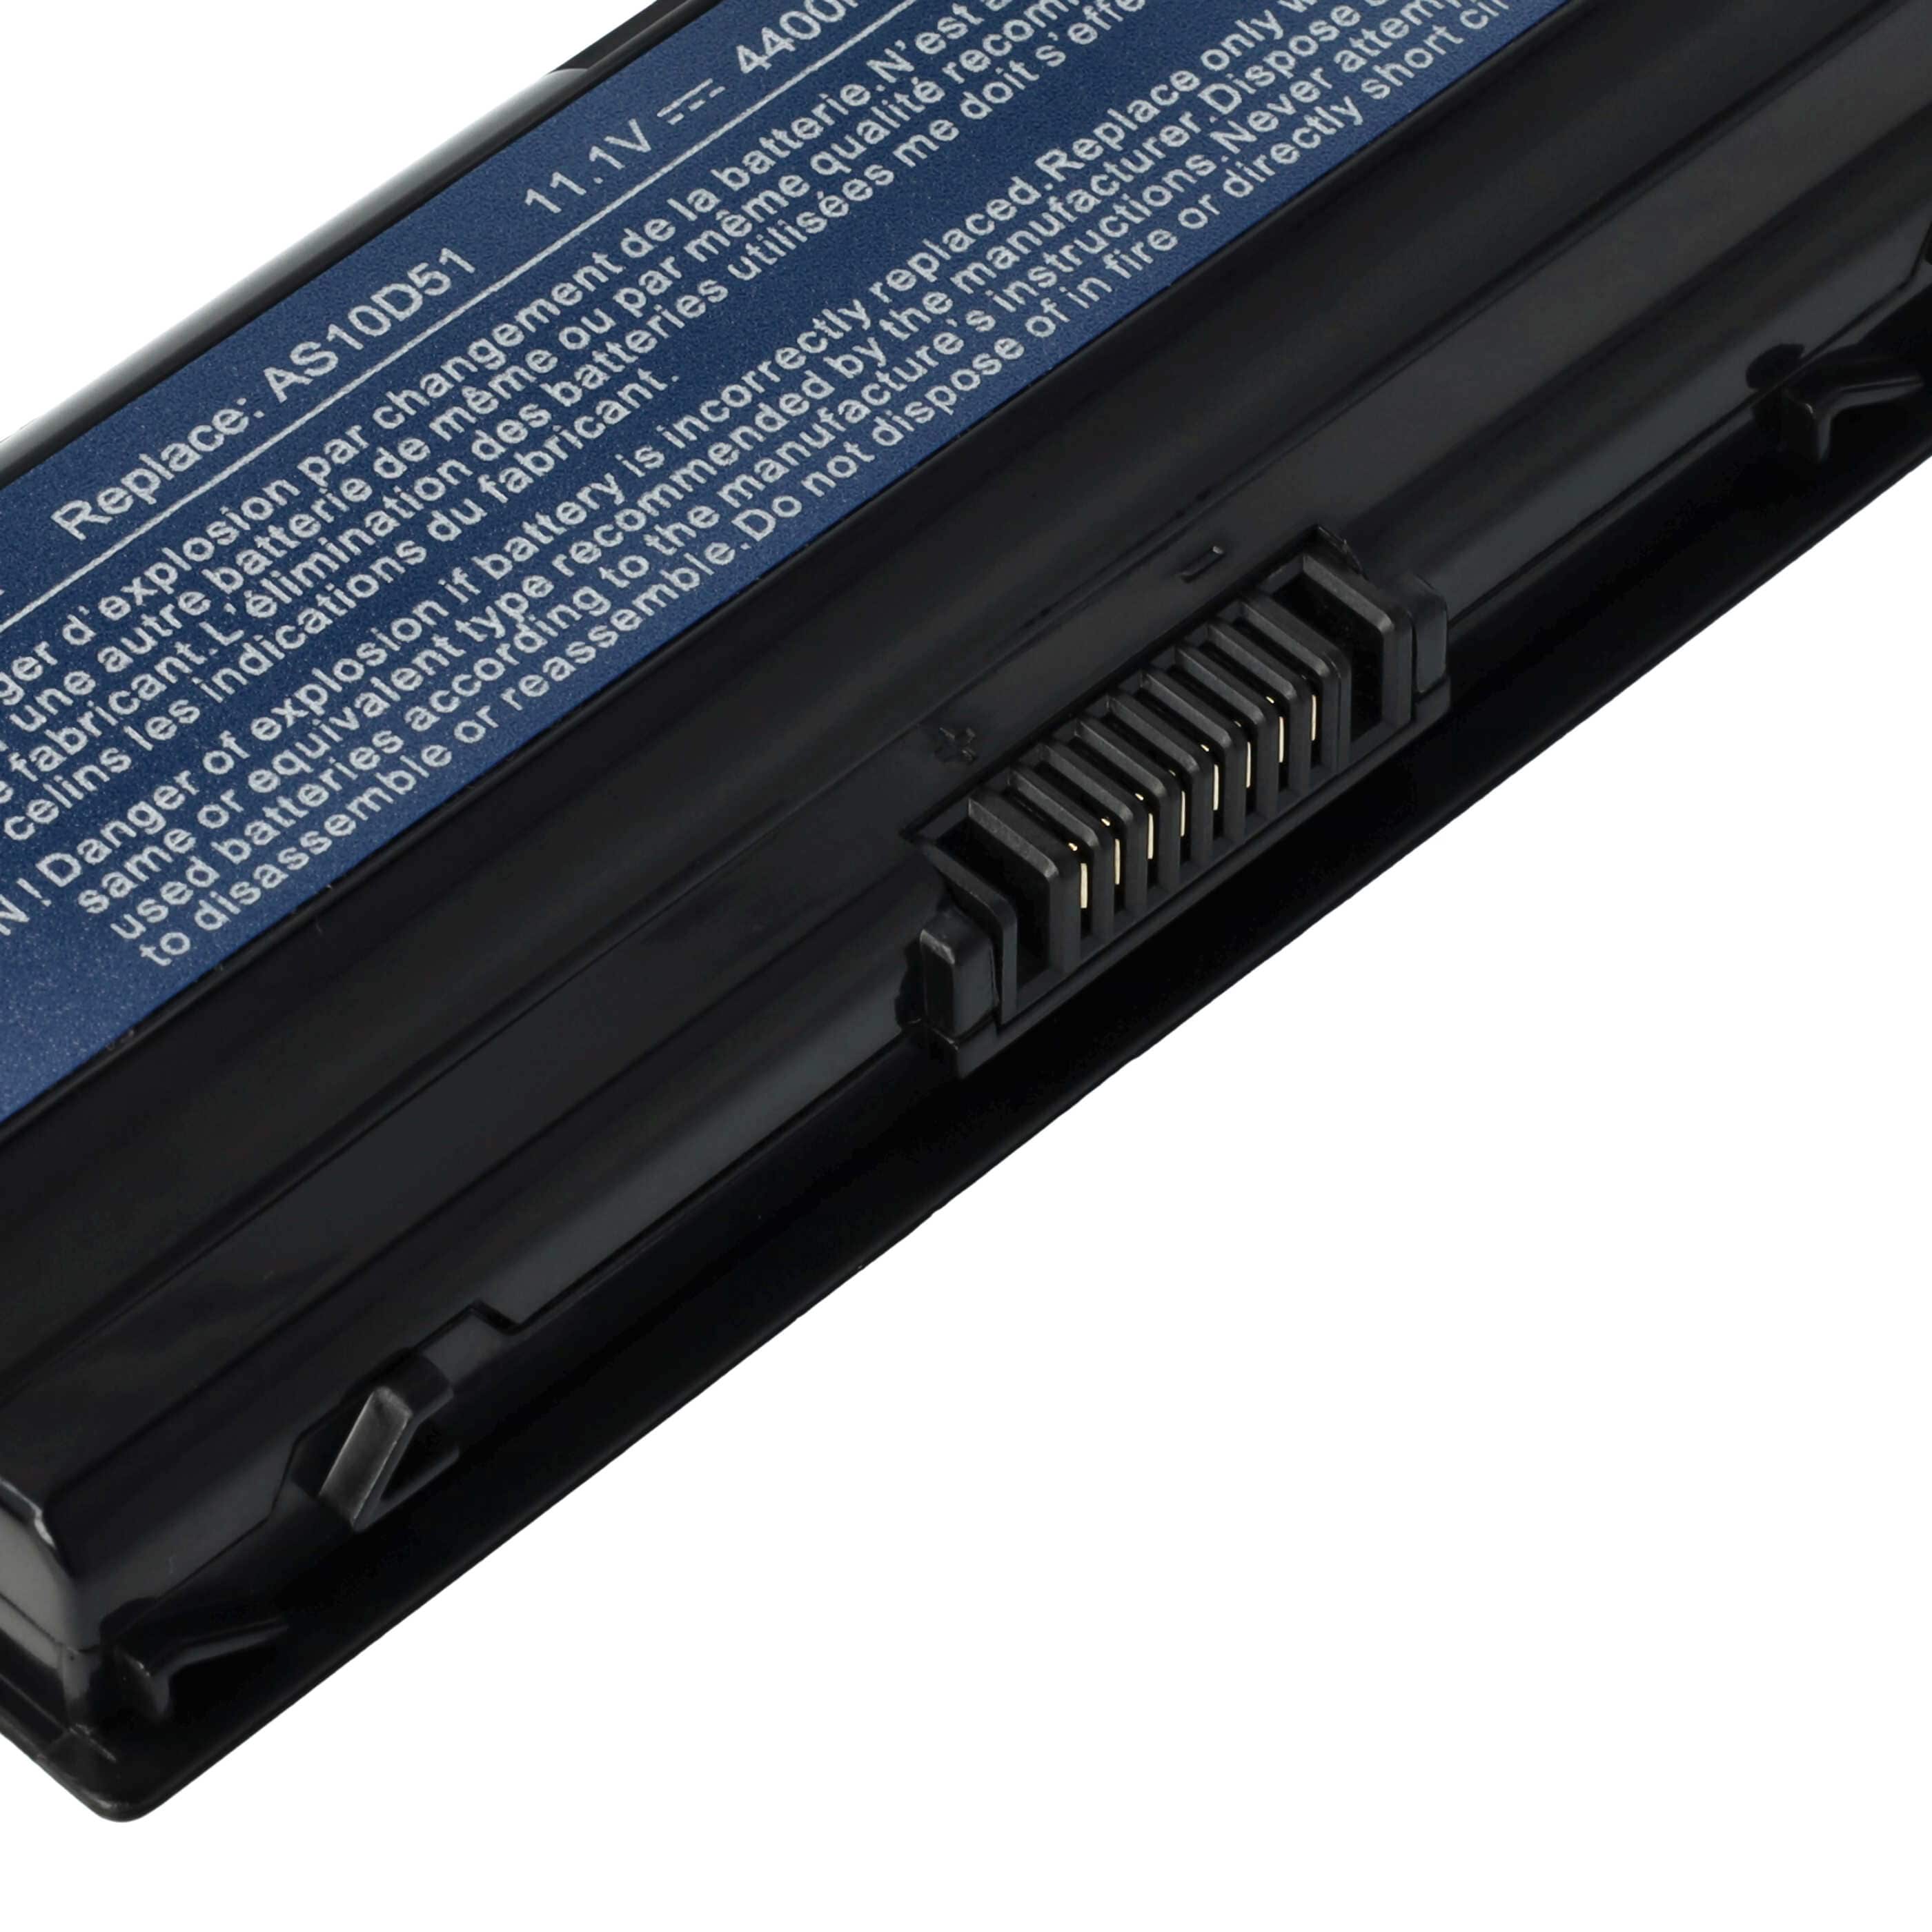 Notebook Replacement Battery for Acer Aspire 7741G, 7750G, V3-771G - 4400mAh 11.1V Li-Ion, black